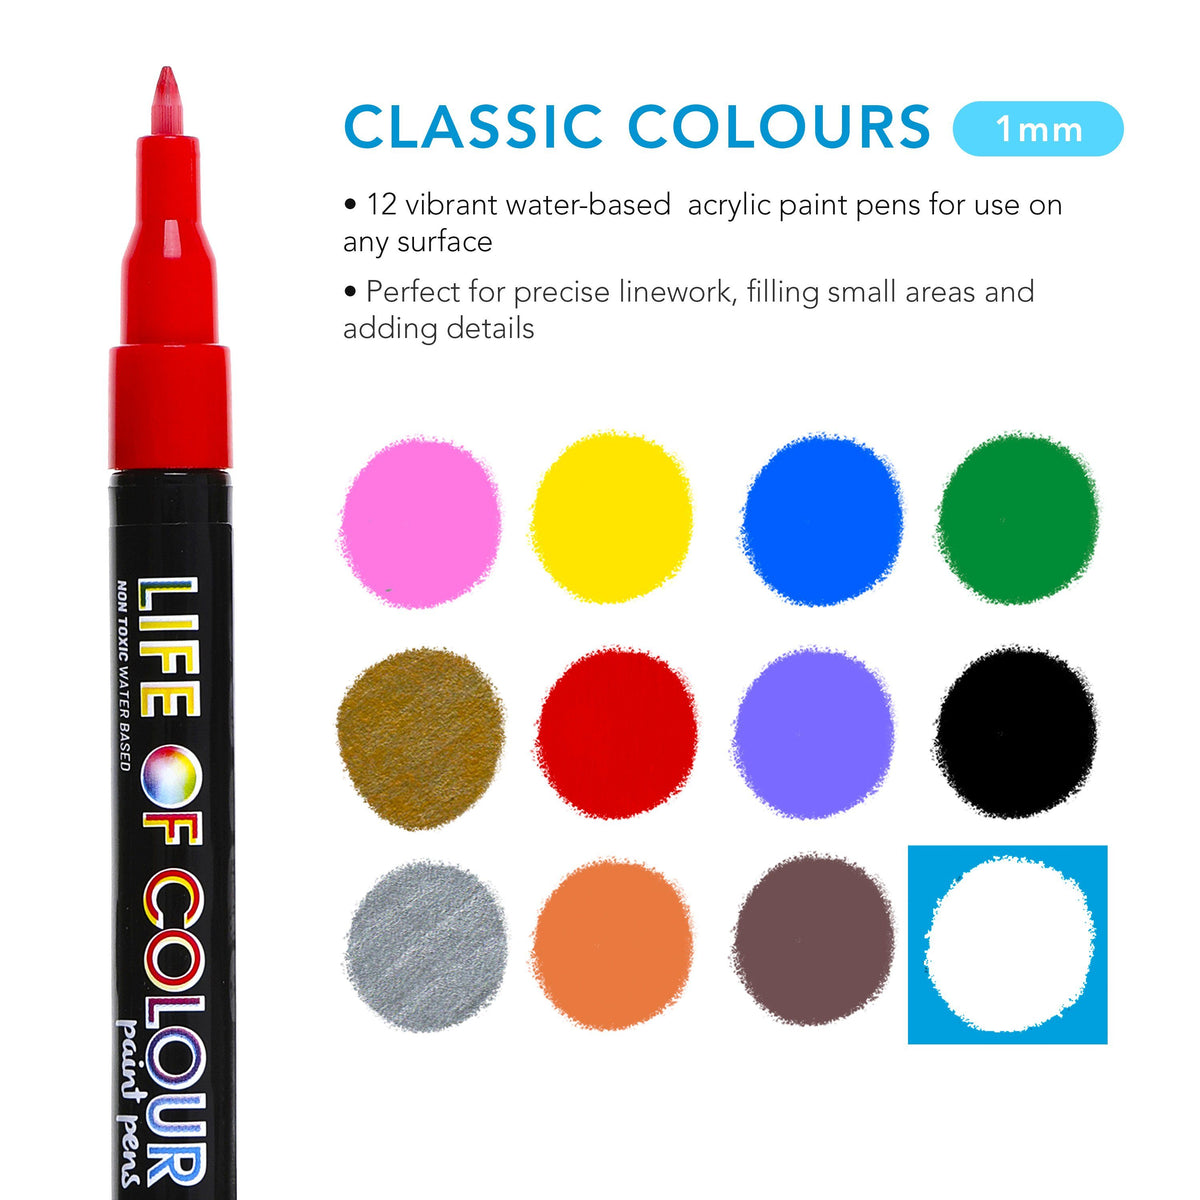 Colour with Posca Sets and Kits Australia Wide